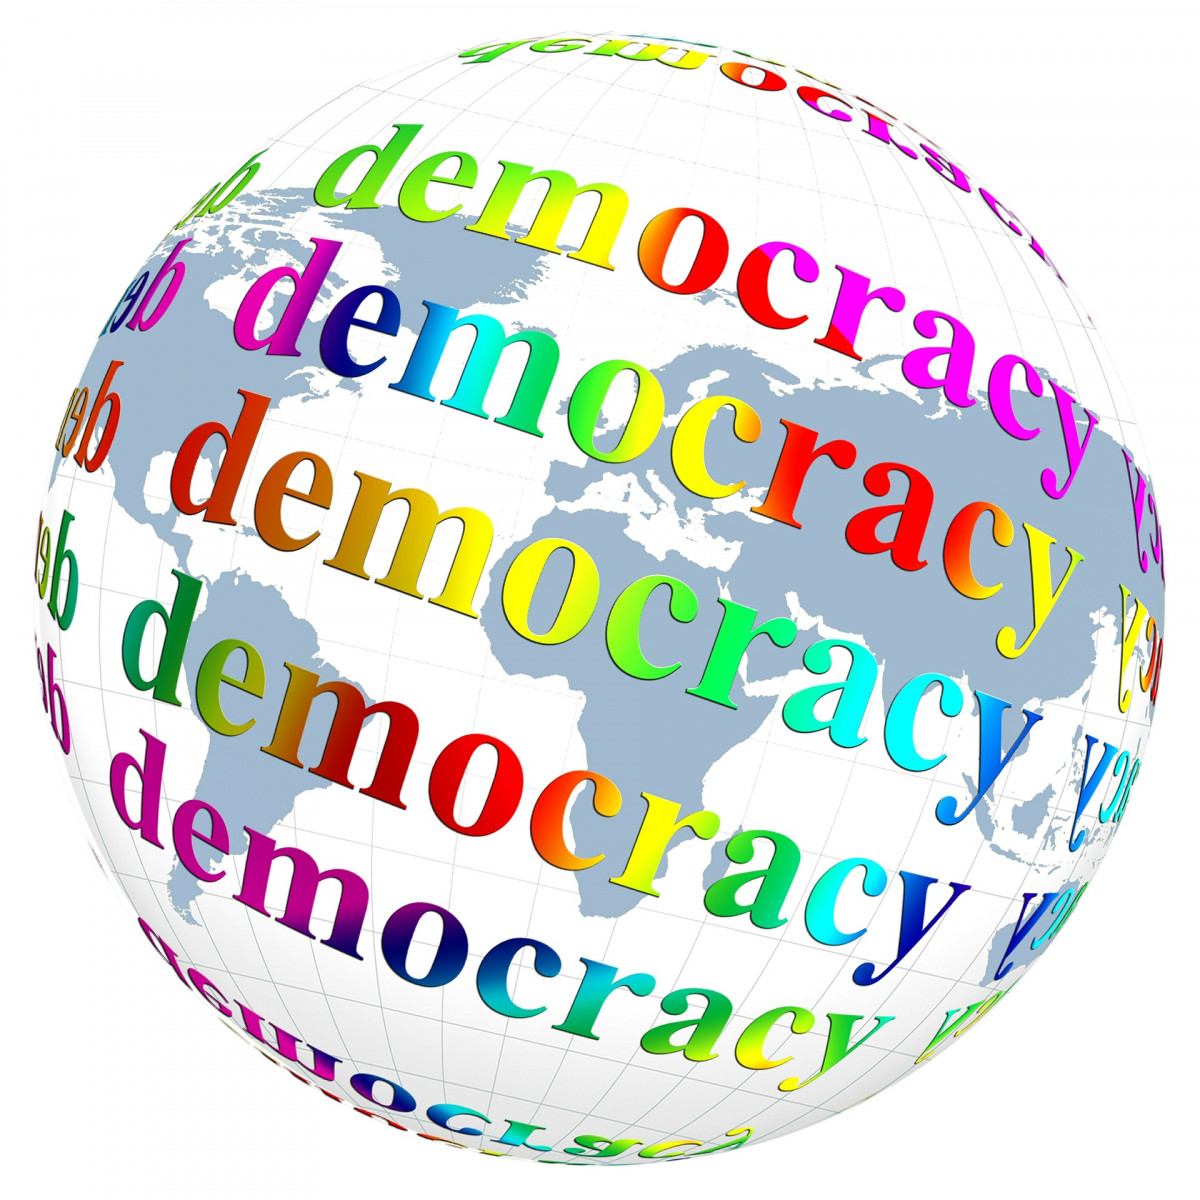 democracy-450597_1920.jpg